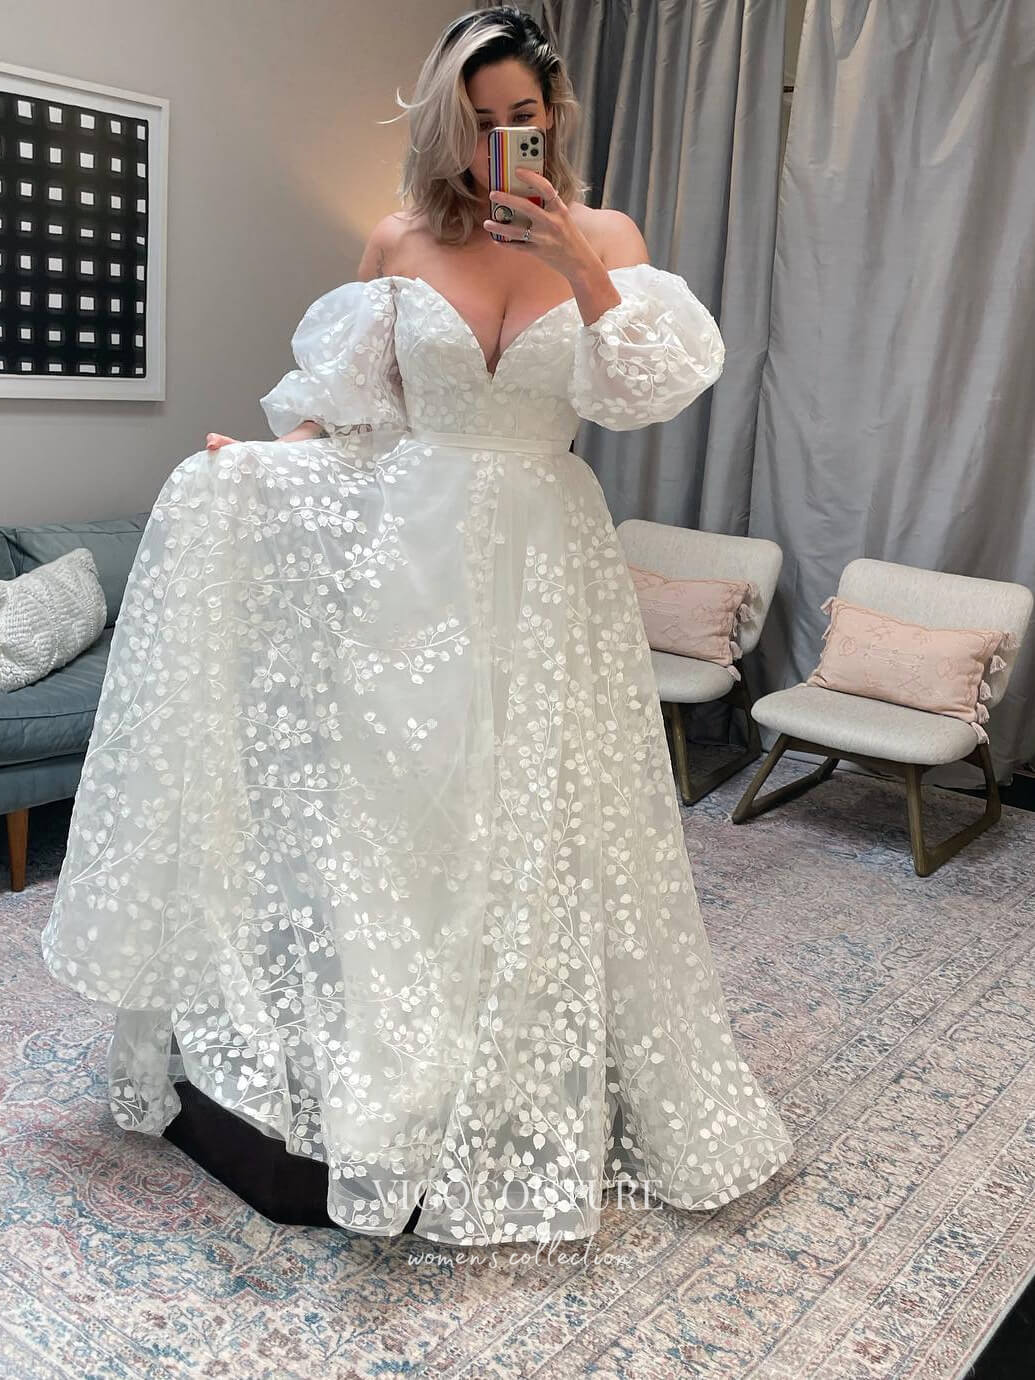 vigocouture-Lace Applique Long Sleeve Wedding Dresses A-Line Sweetheart Neck Bridal Dresses W0065-Wedding Dresses-vigocouture-